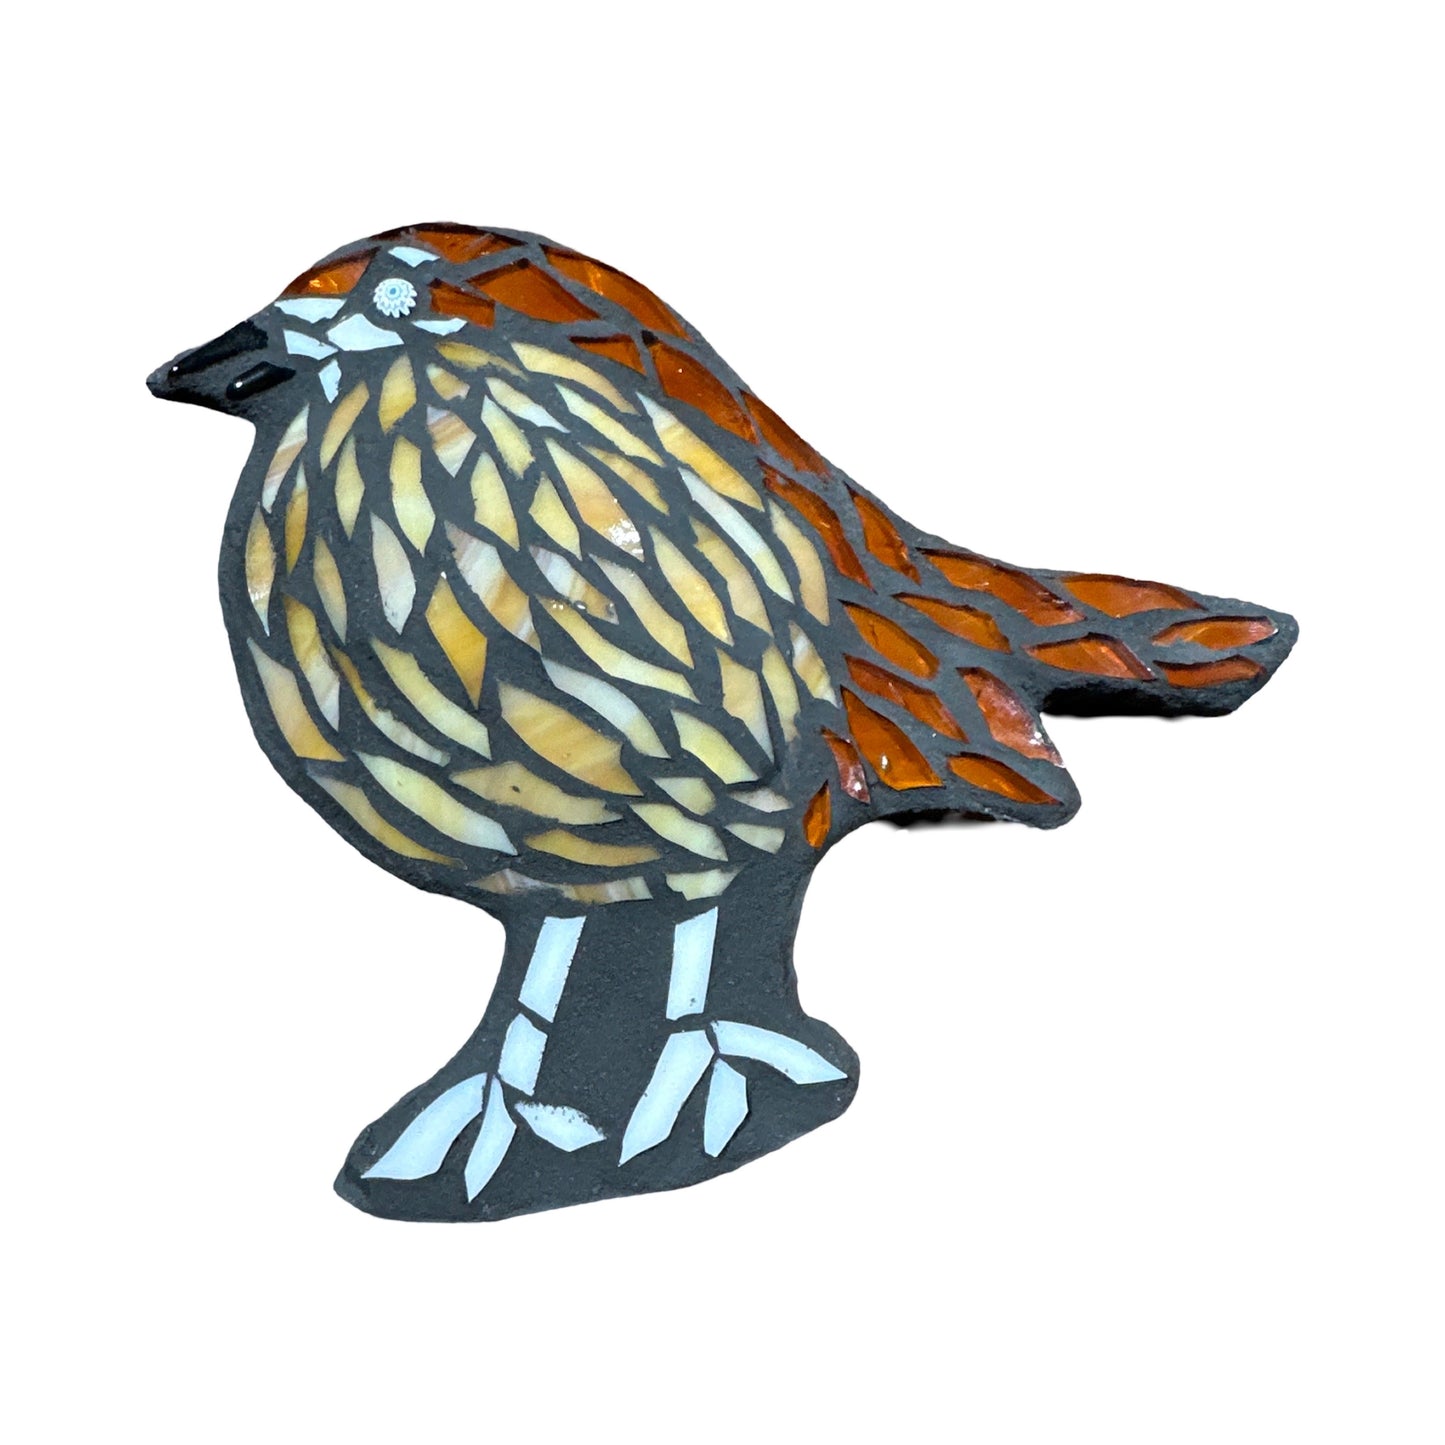 Mosaic glass fat bird ornaments